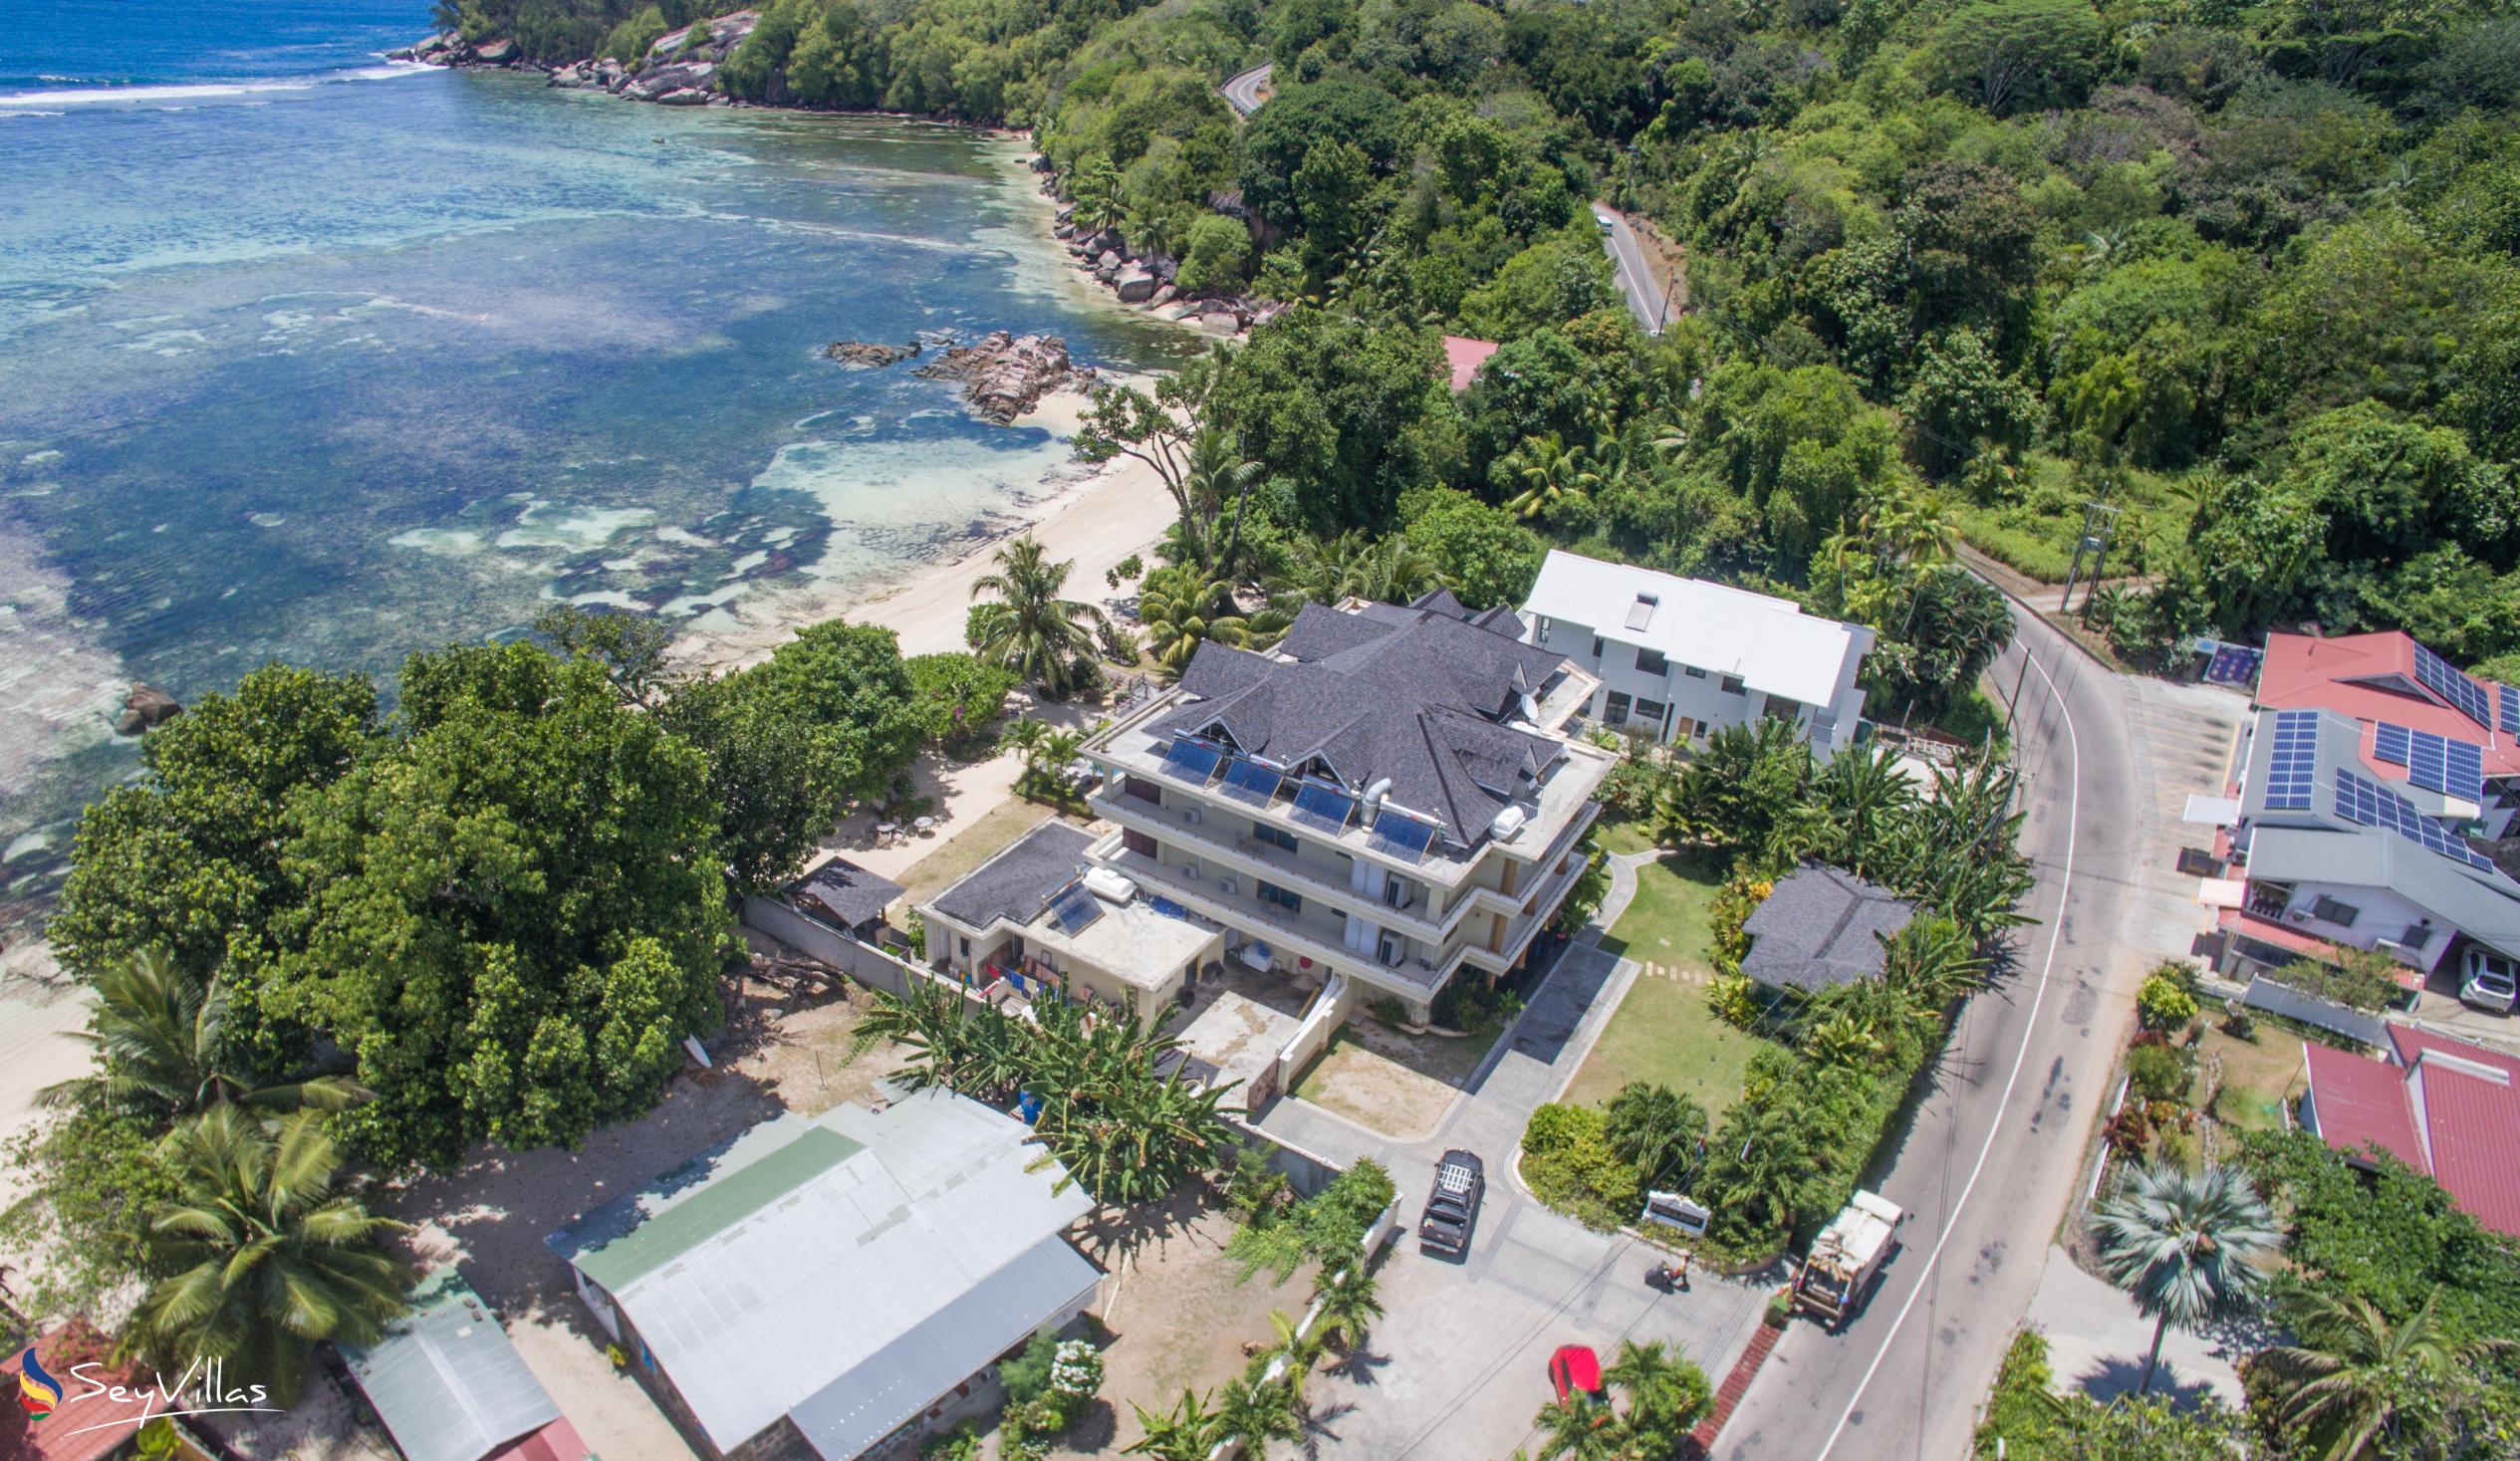 Foto 37: Crown Beach Hotel - Posizione - Mahé (Seychelles)